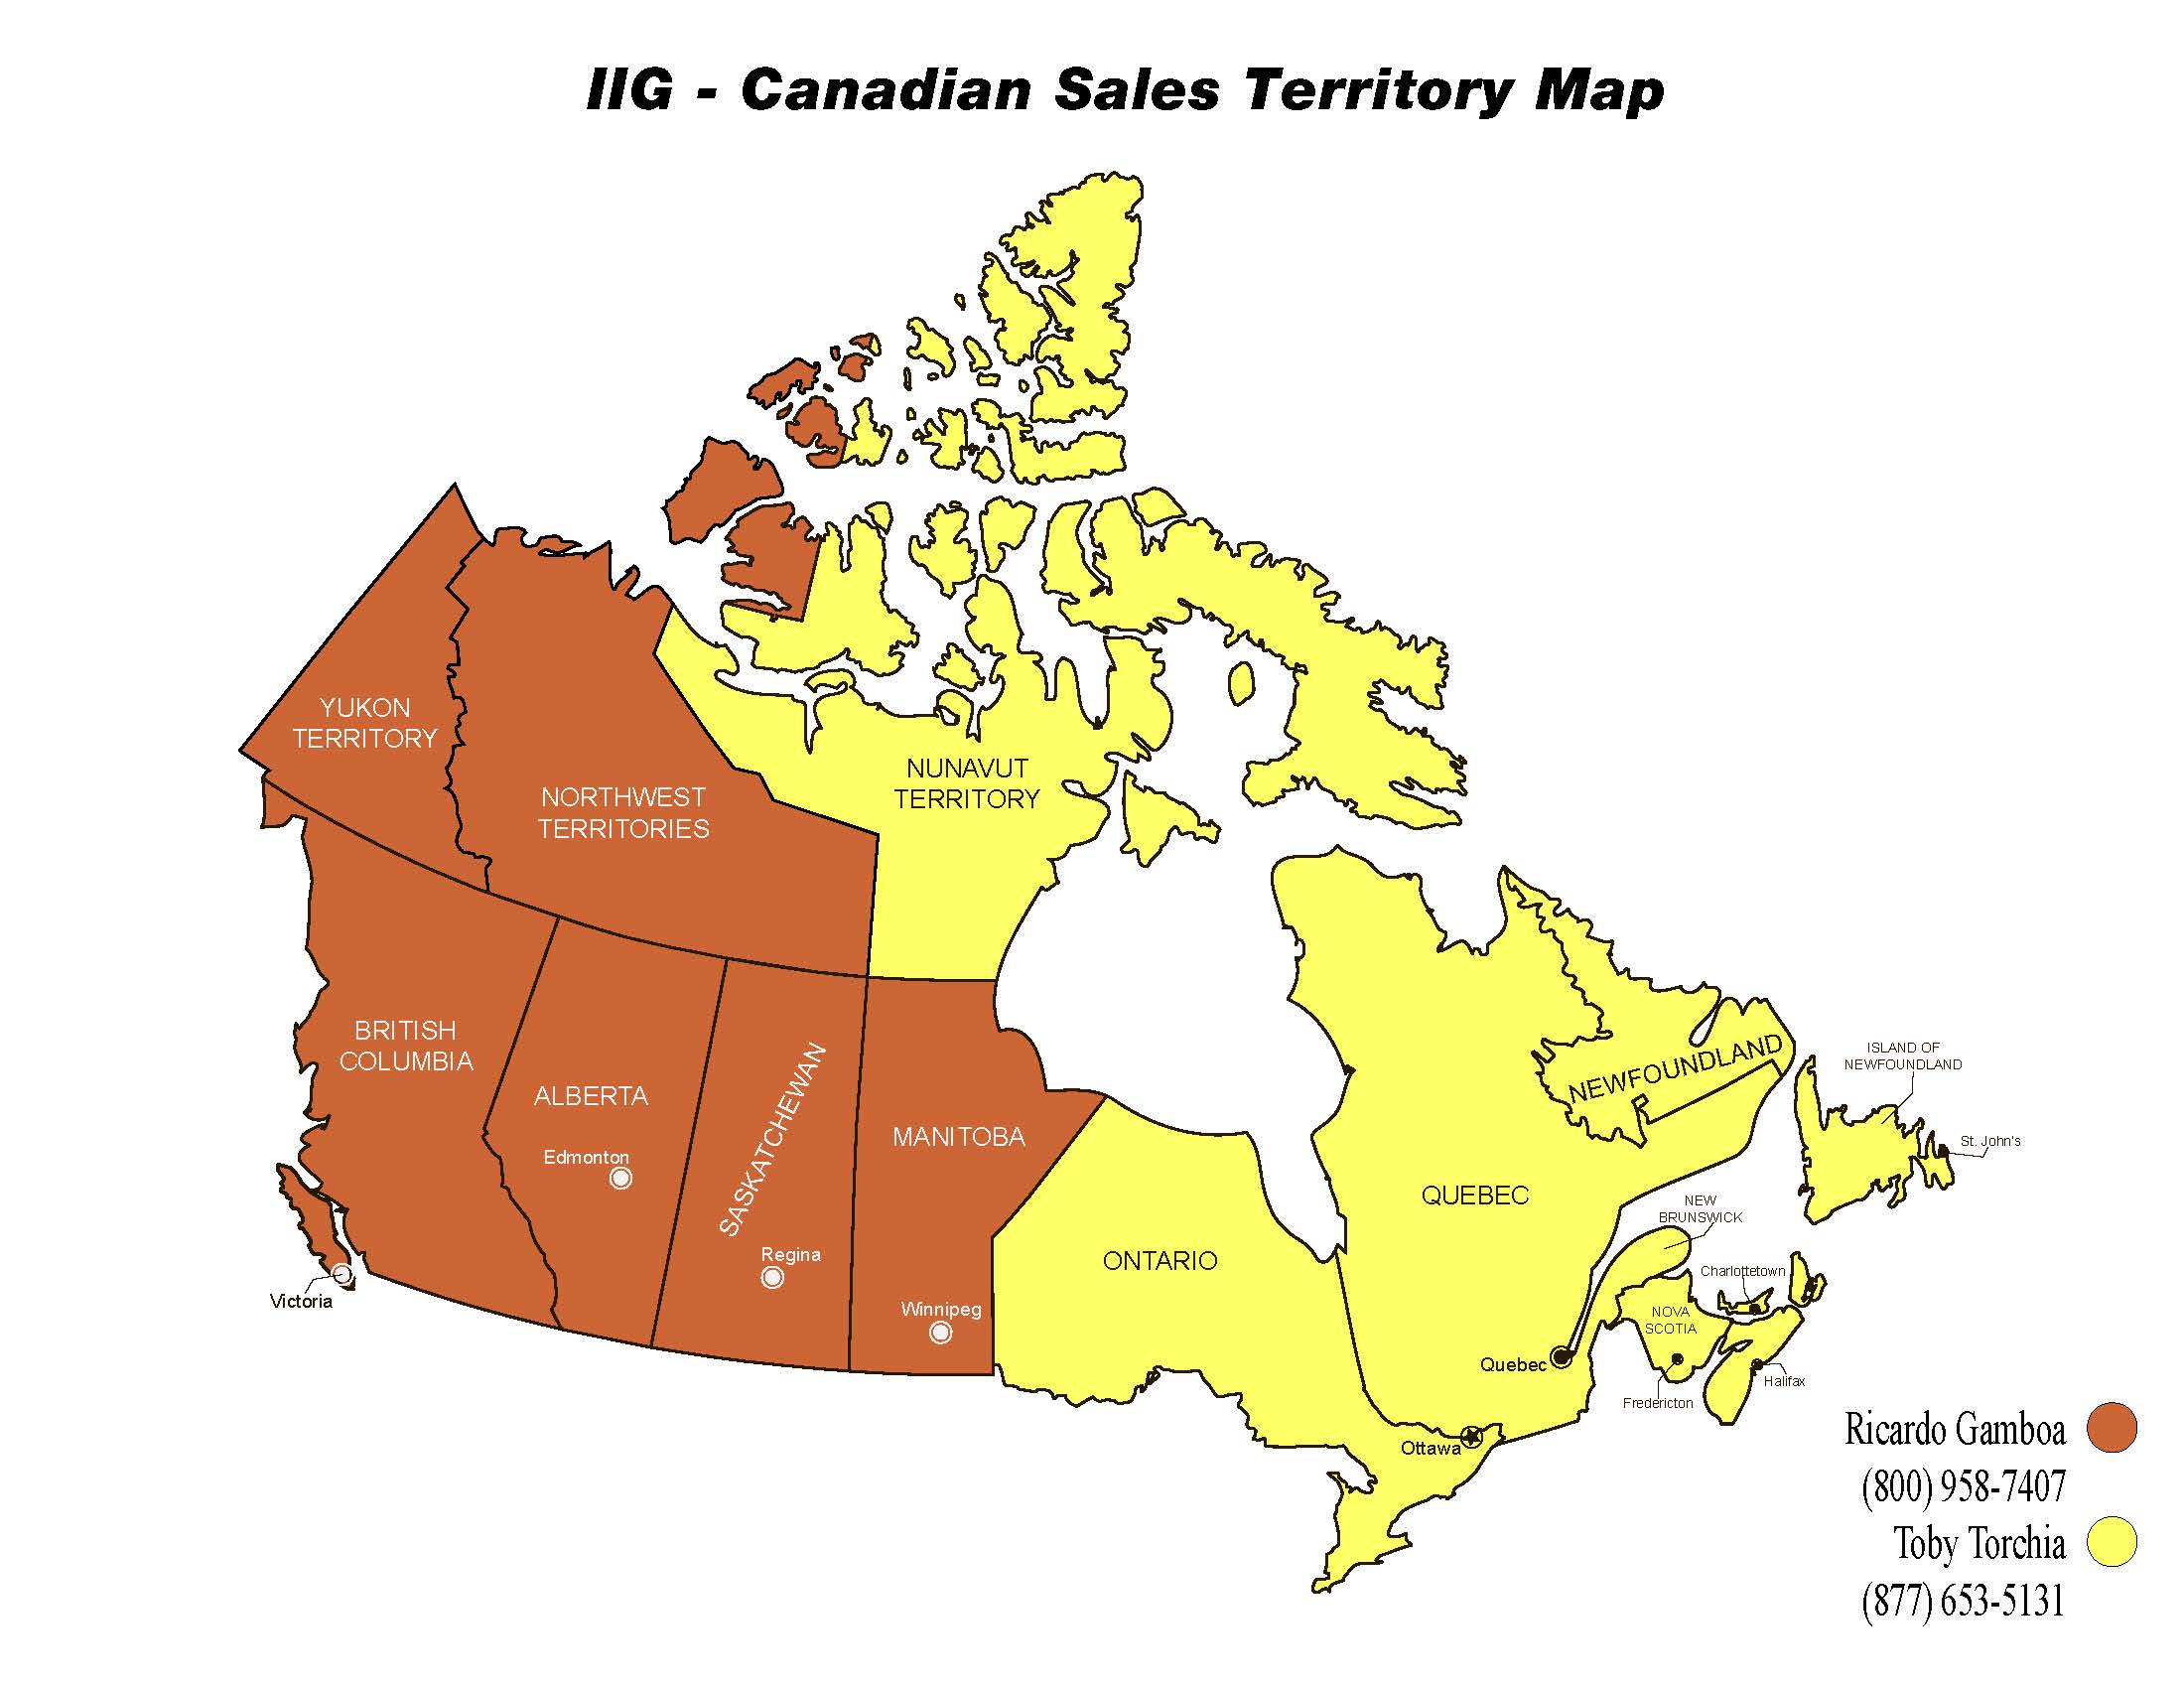 IIG Sales Territory Map